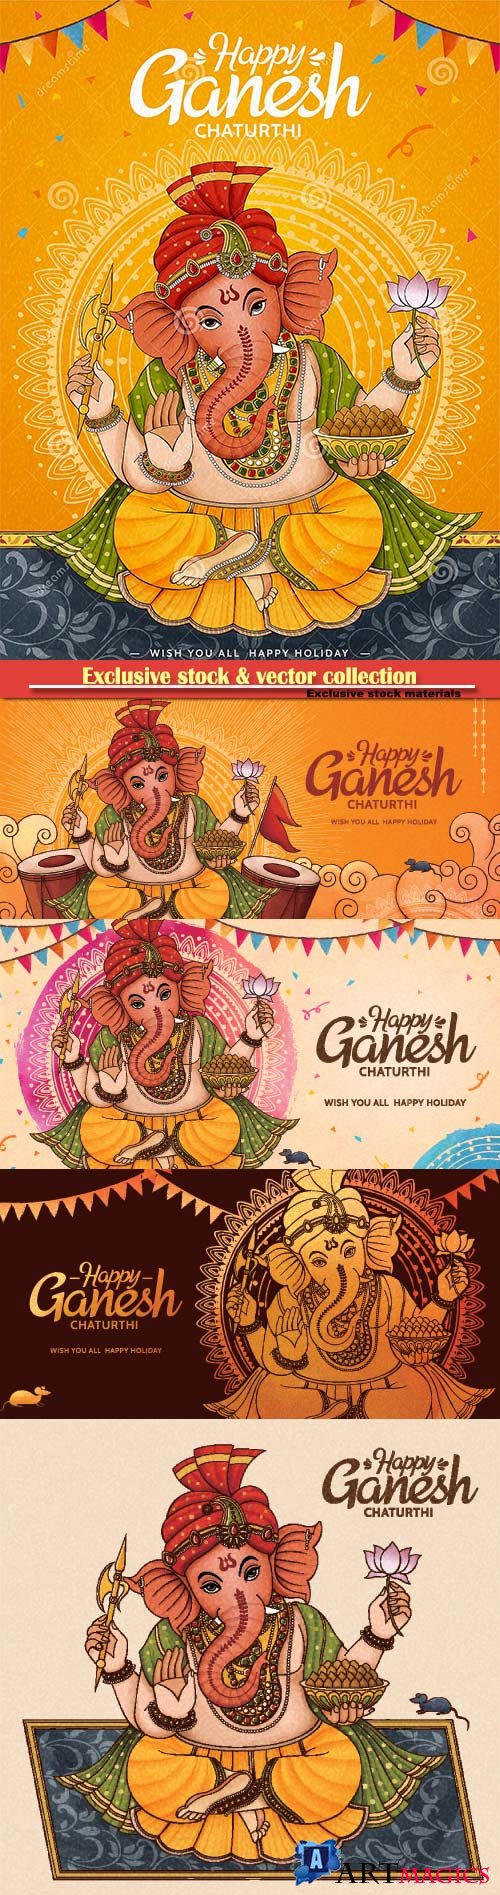 Happy Ganesh Chaturthi poster design